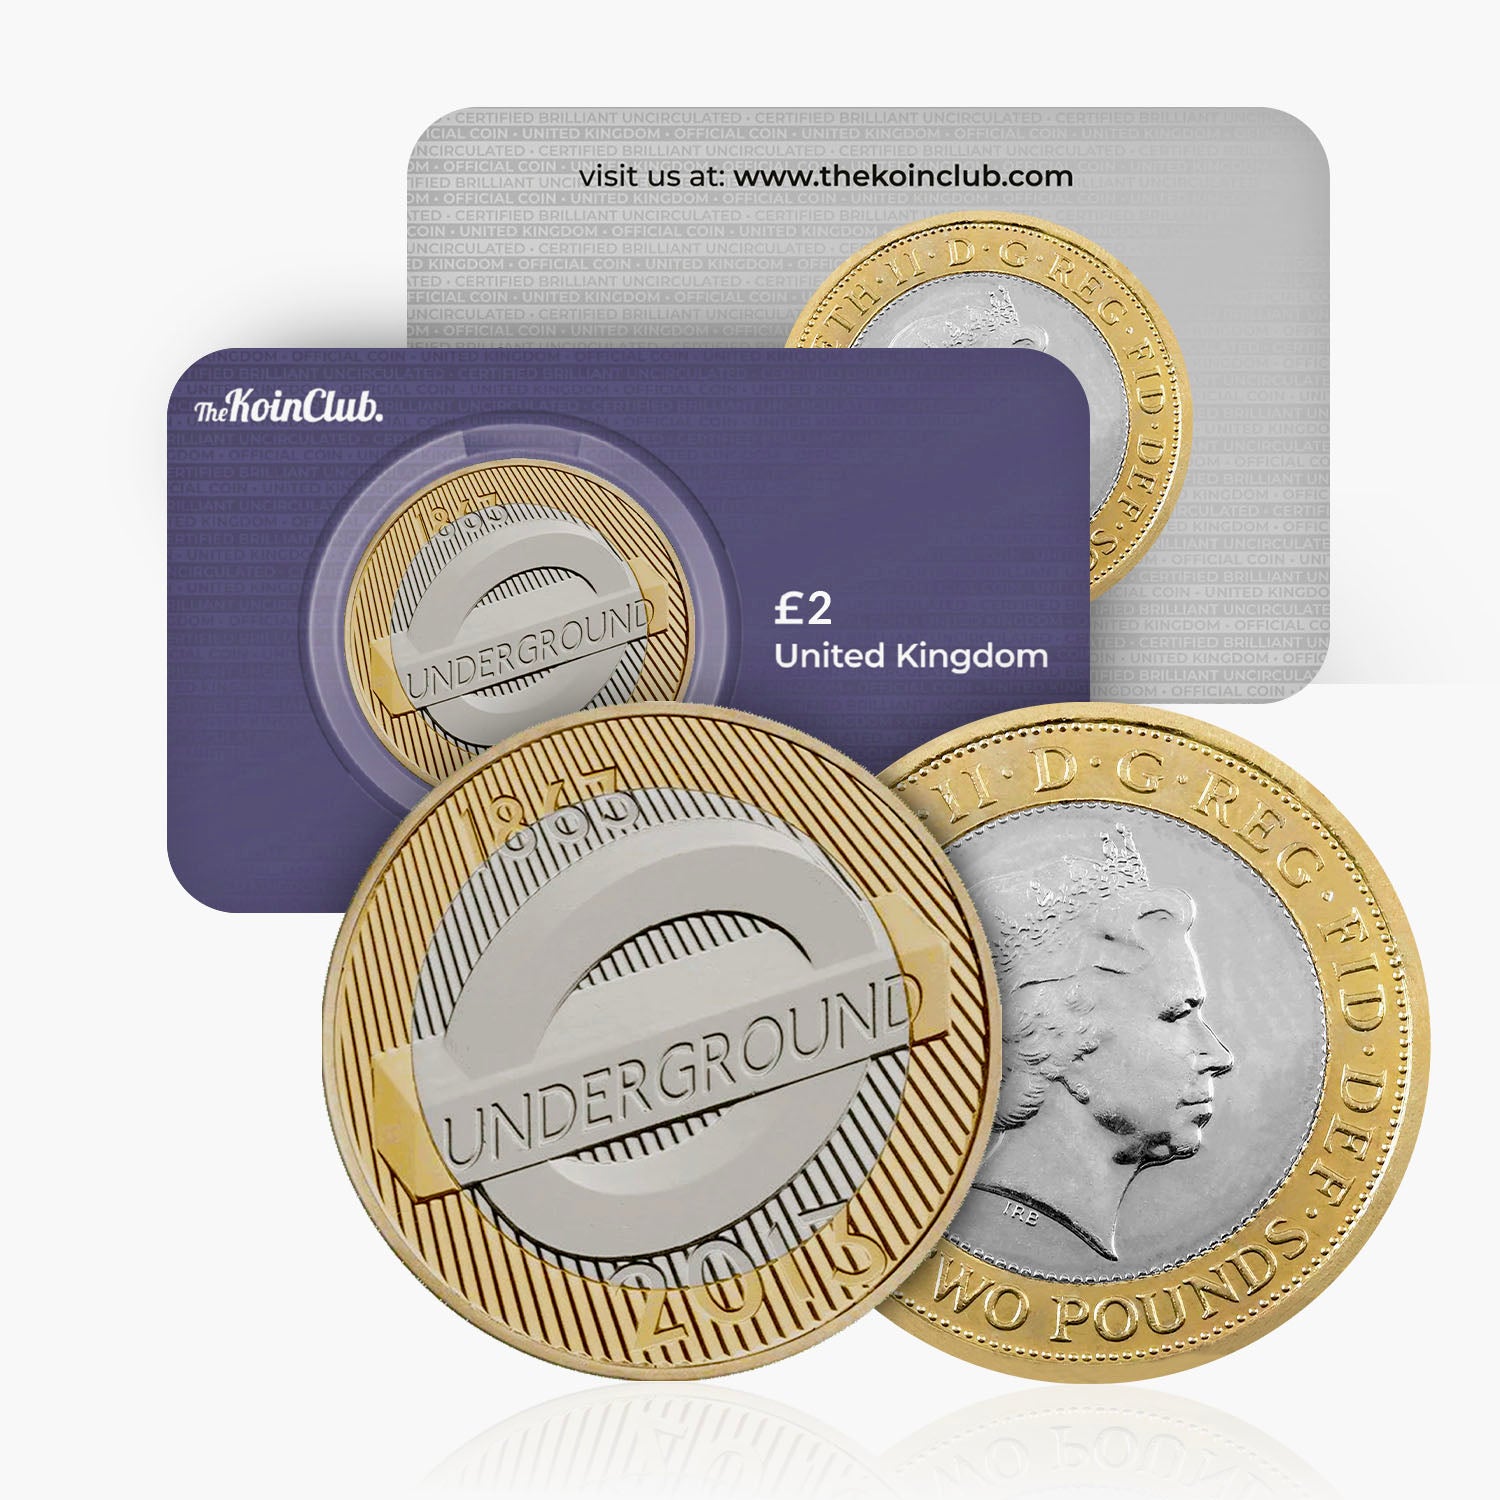 2013 Circulated London Underground Roundel UK £2 Coin